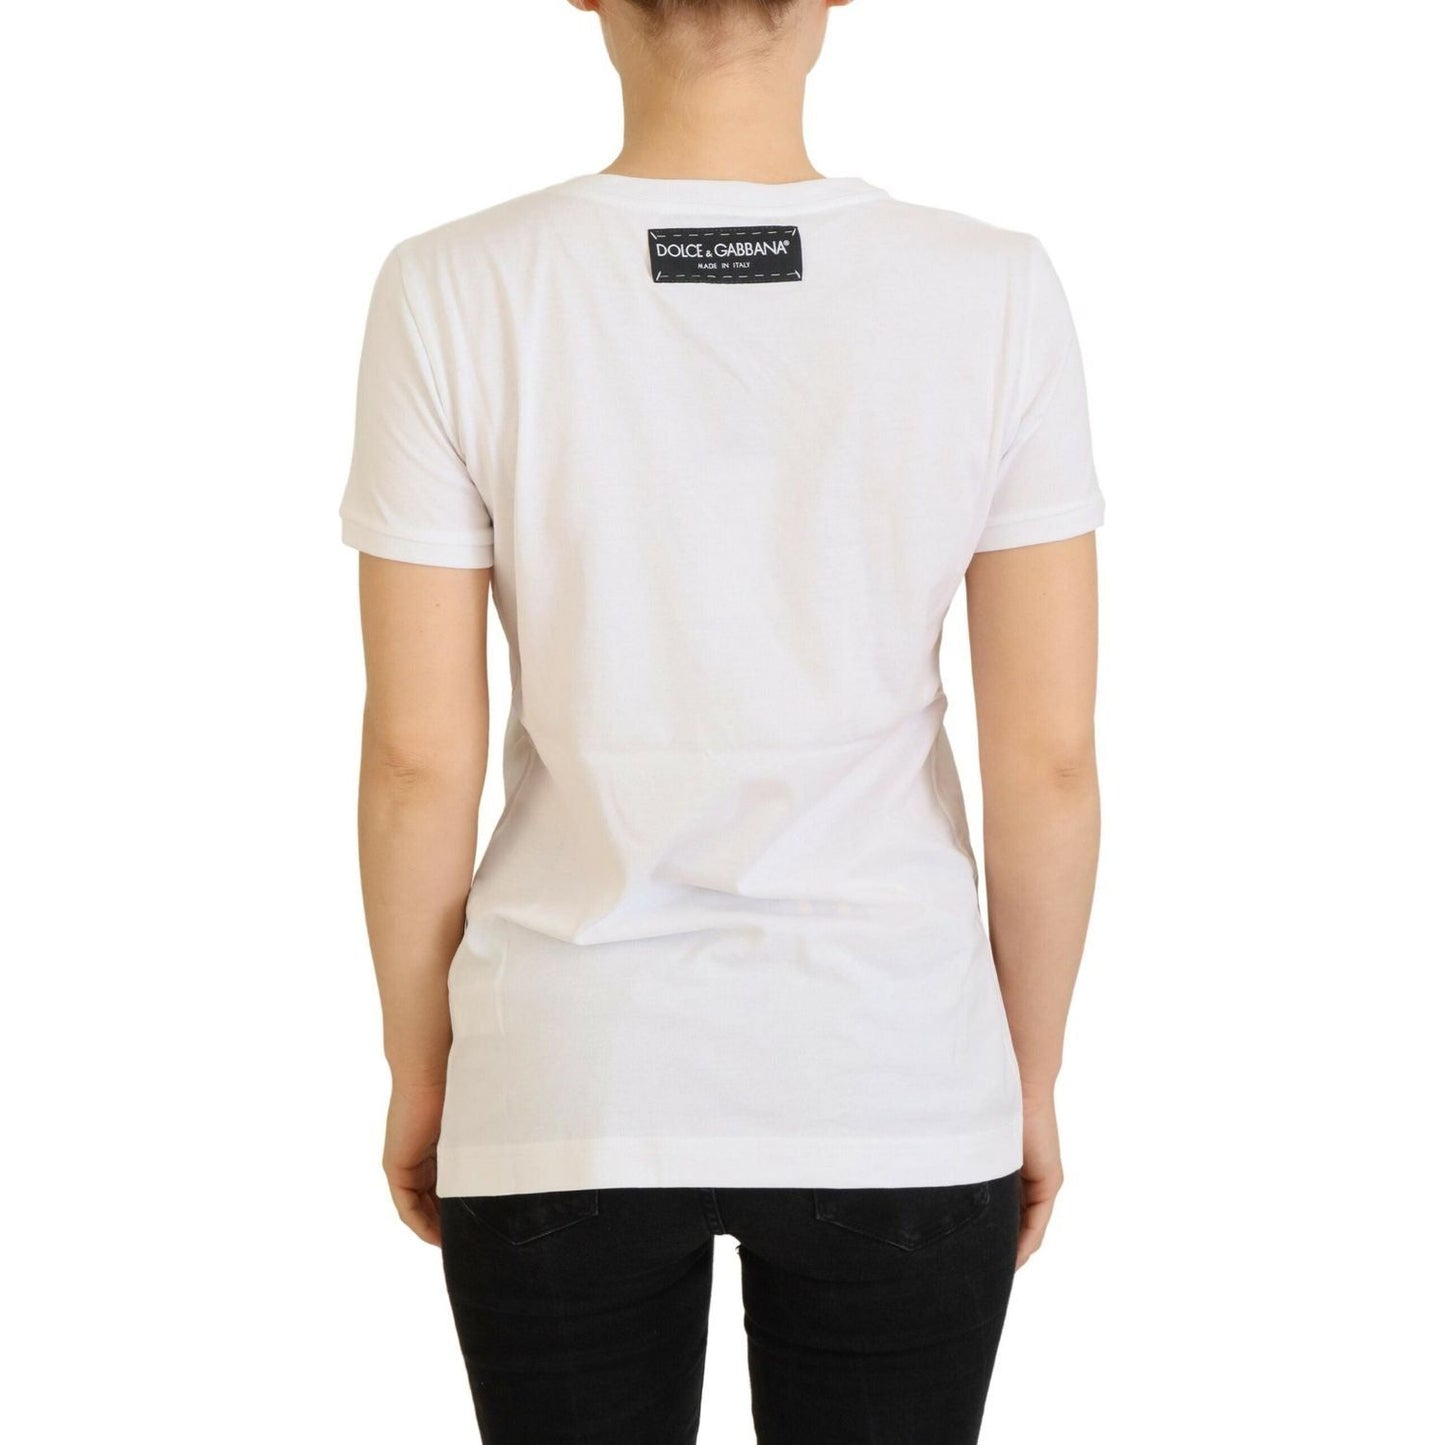 Dolce & Gabbana Iconic Prints Designer Cotton Tee t-shirt-top-white-textured-short-sleeve